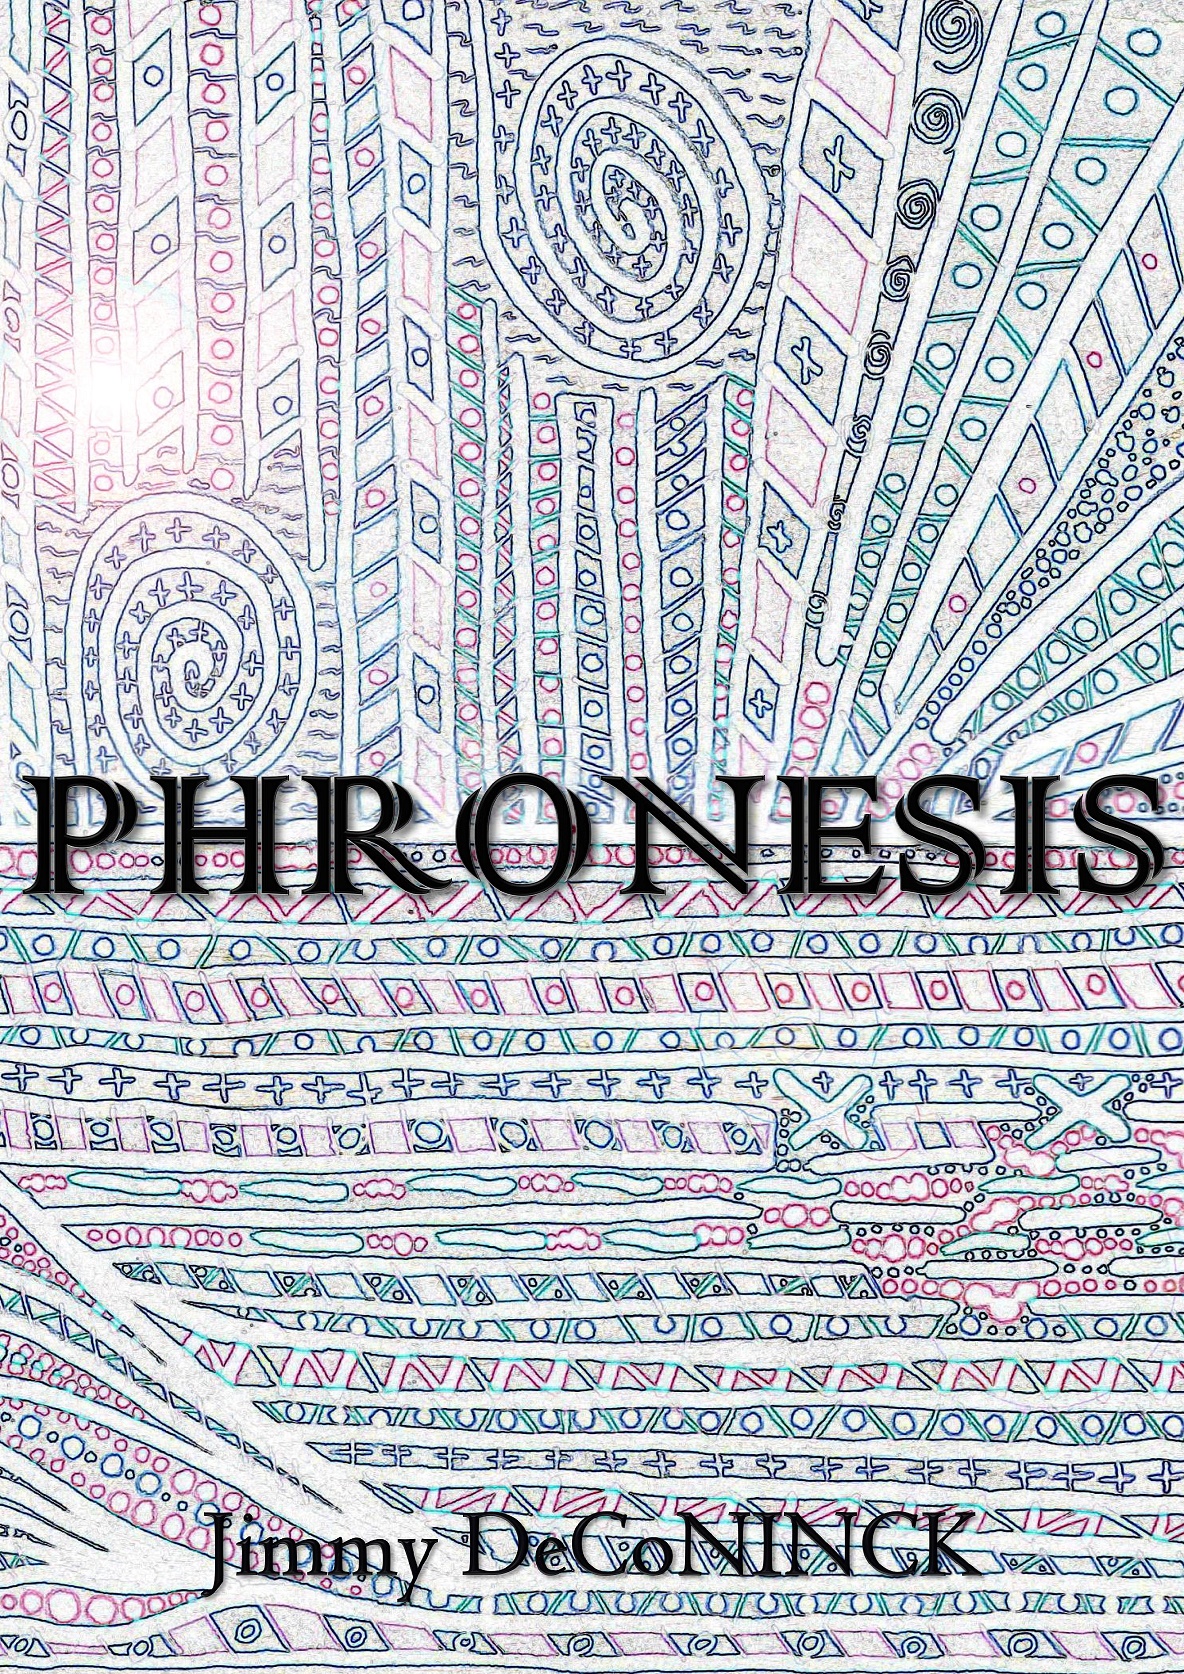 PHRONESIS